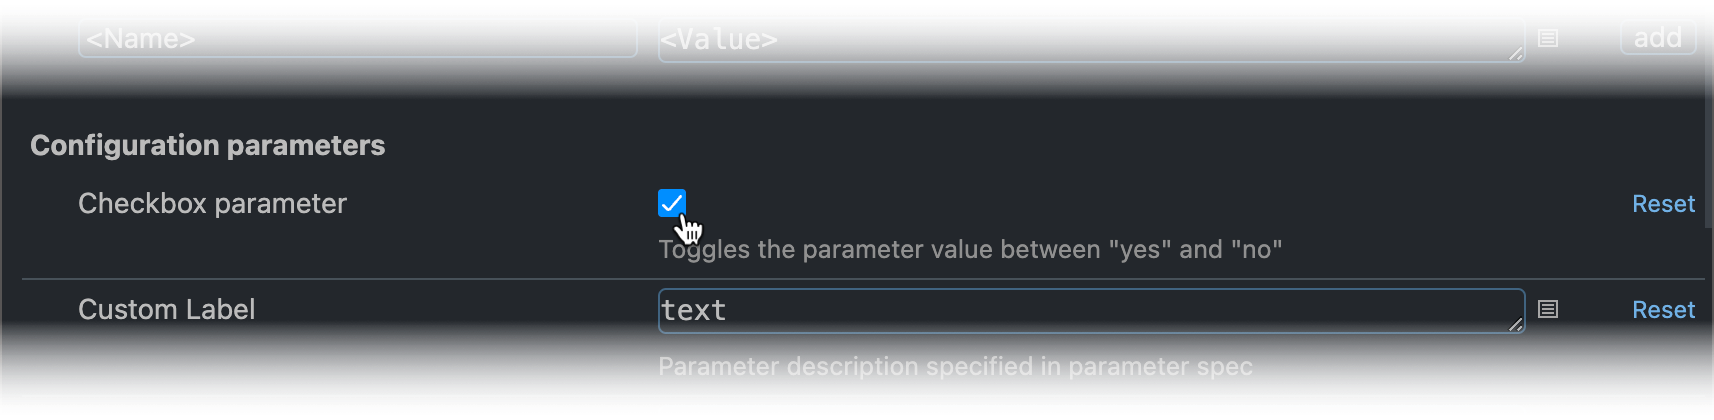 Checkbox parameter